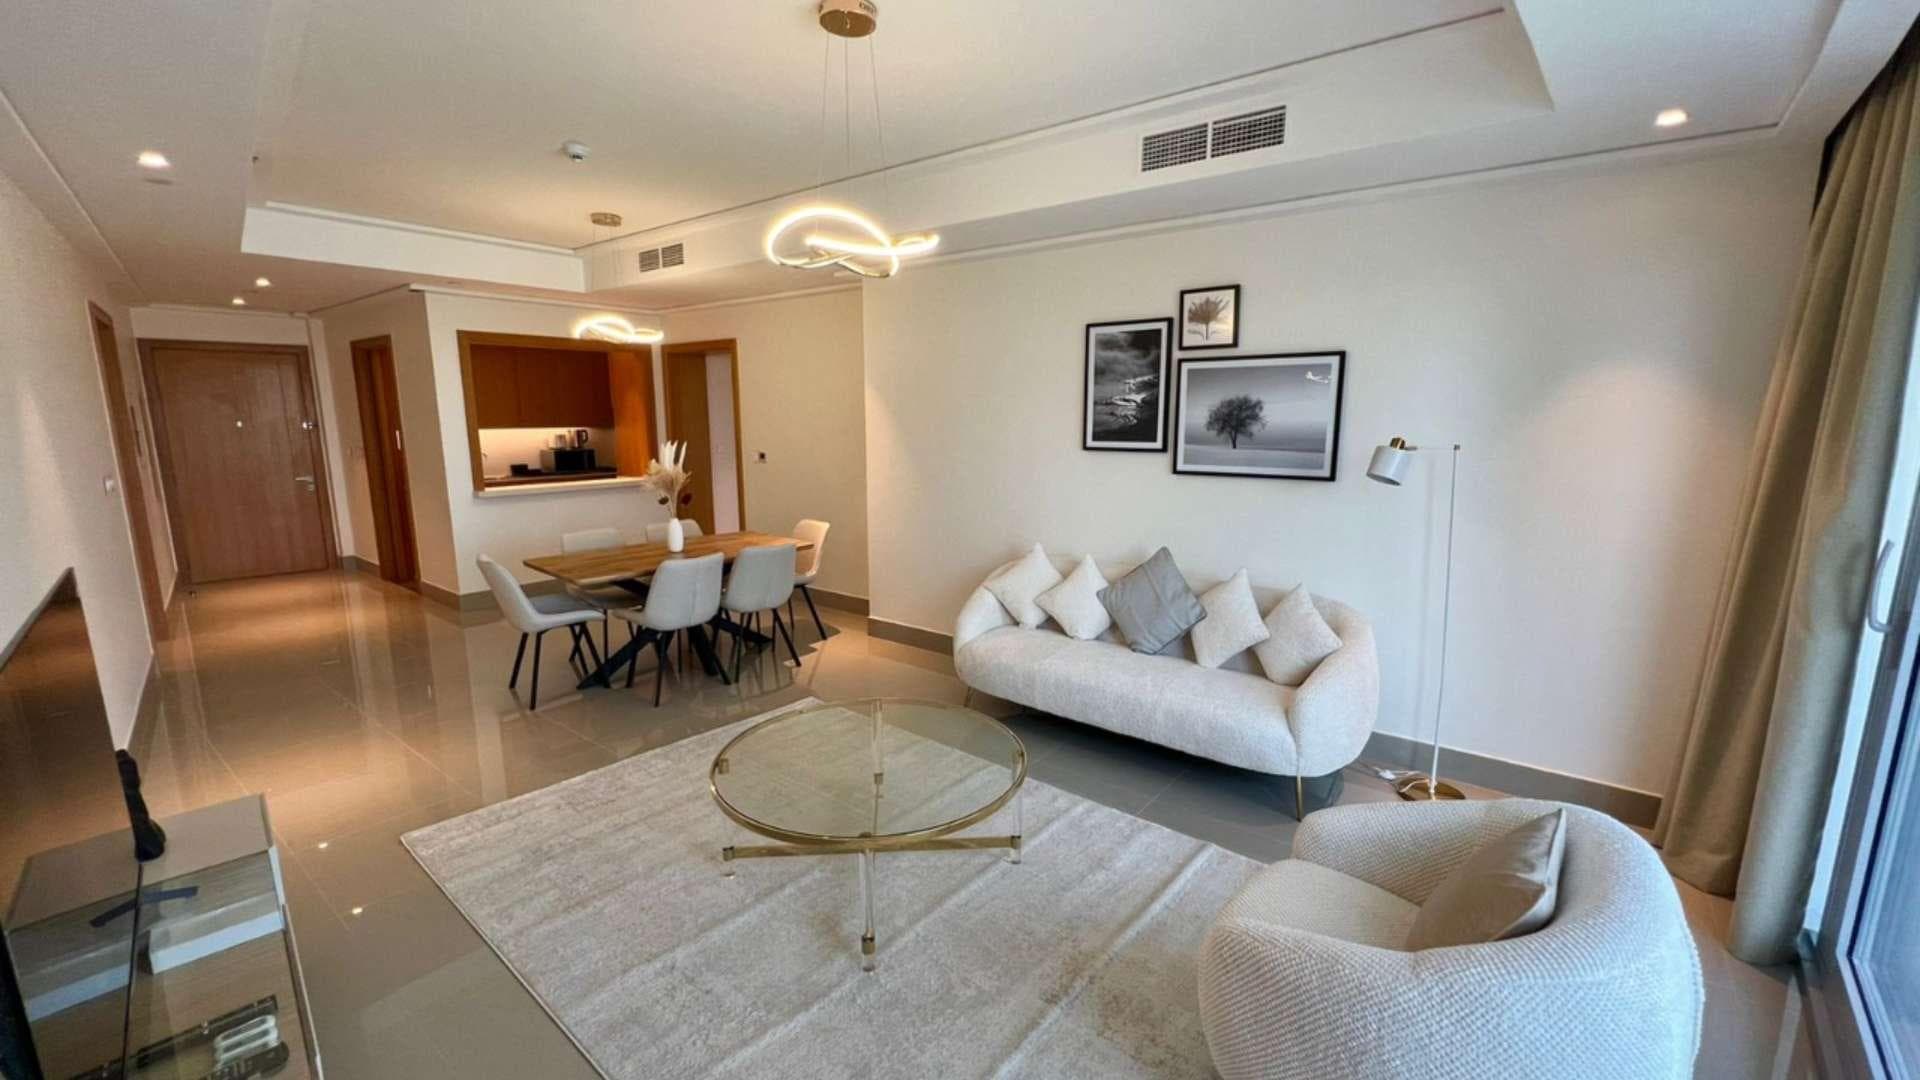 3 Bedroom Apartment For Rent Opera District Lp21077 1065e0ecb46dad00.jpg